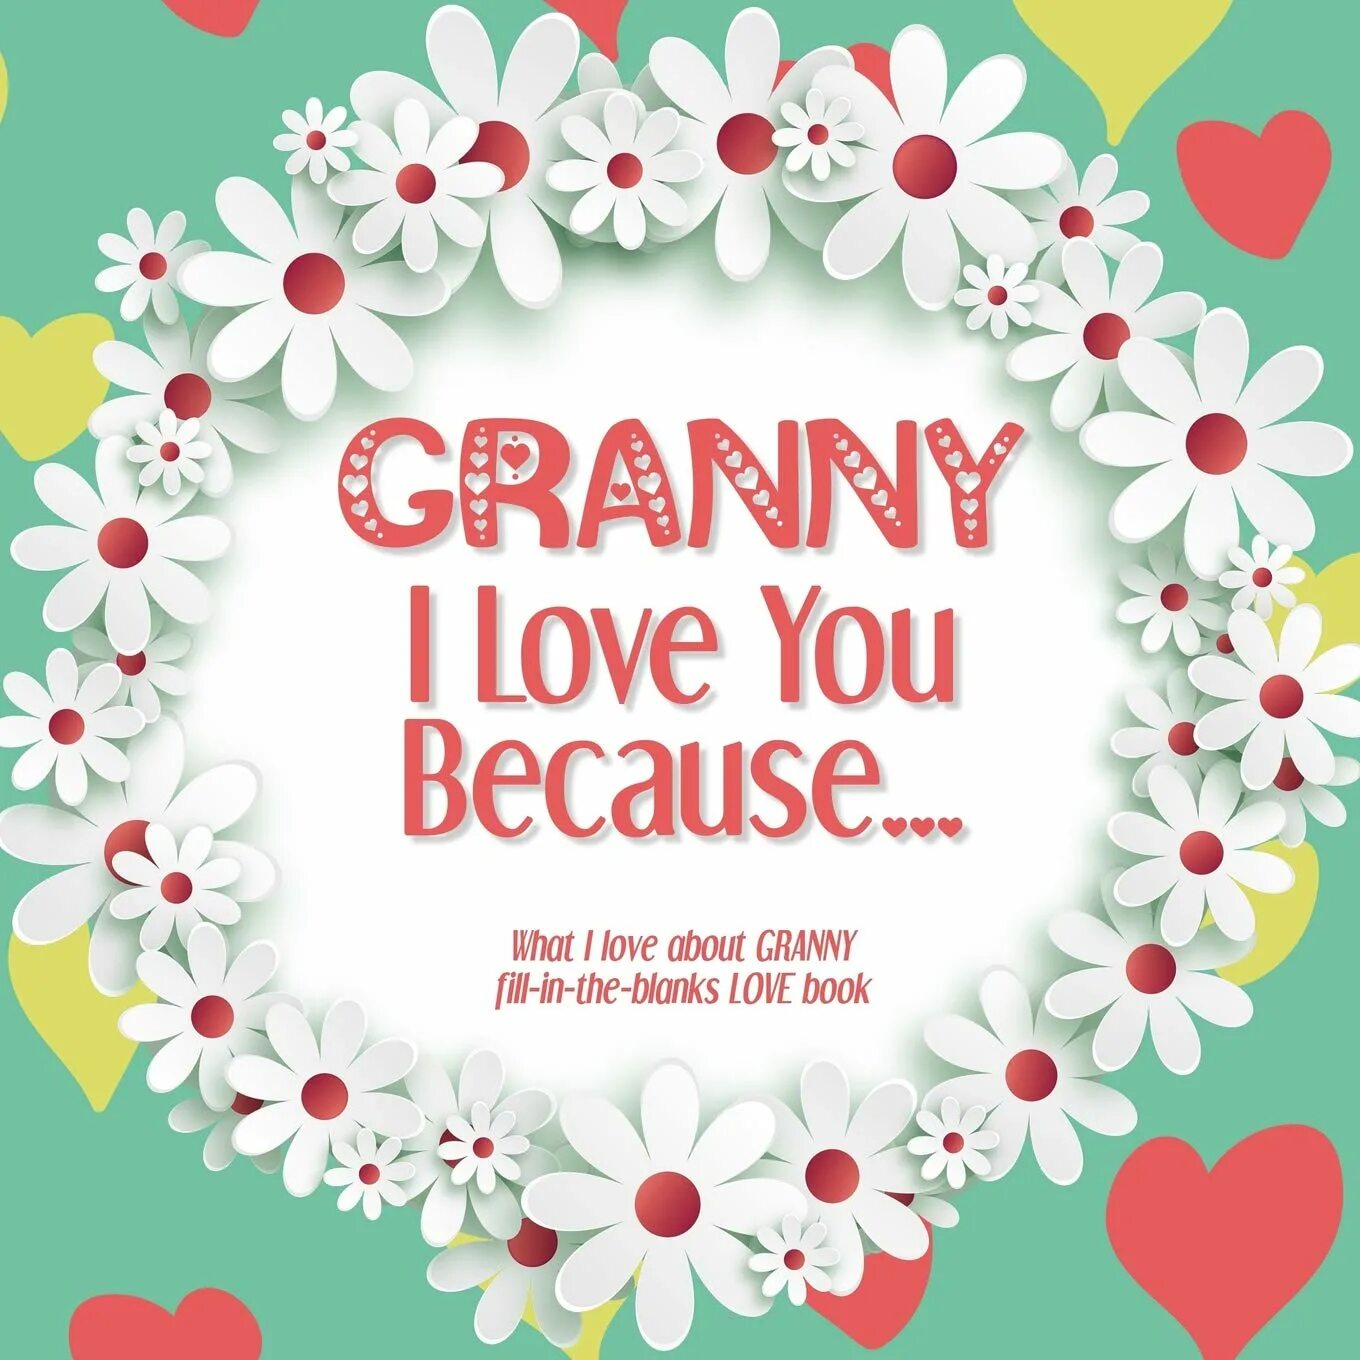 Grandma's love. I Love granny. I Love you бабушка. I Love grandmother. Beloved grandmother проект.